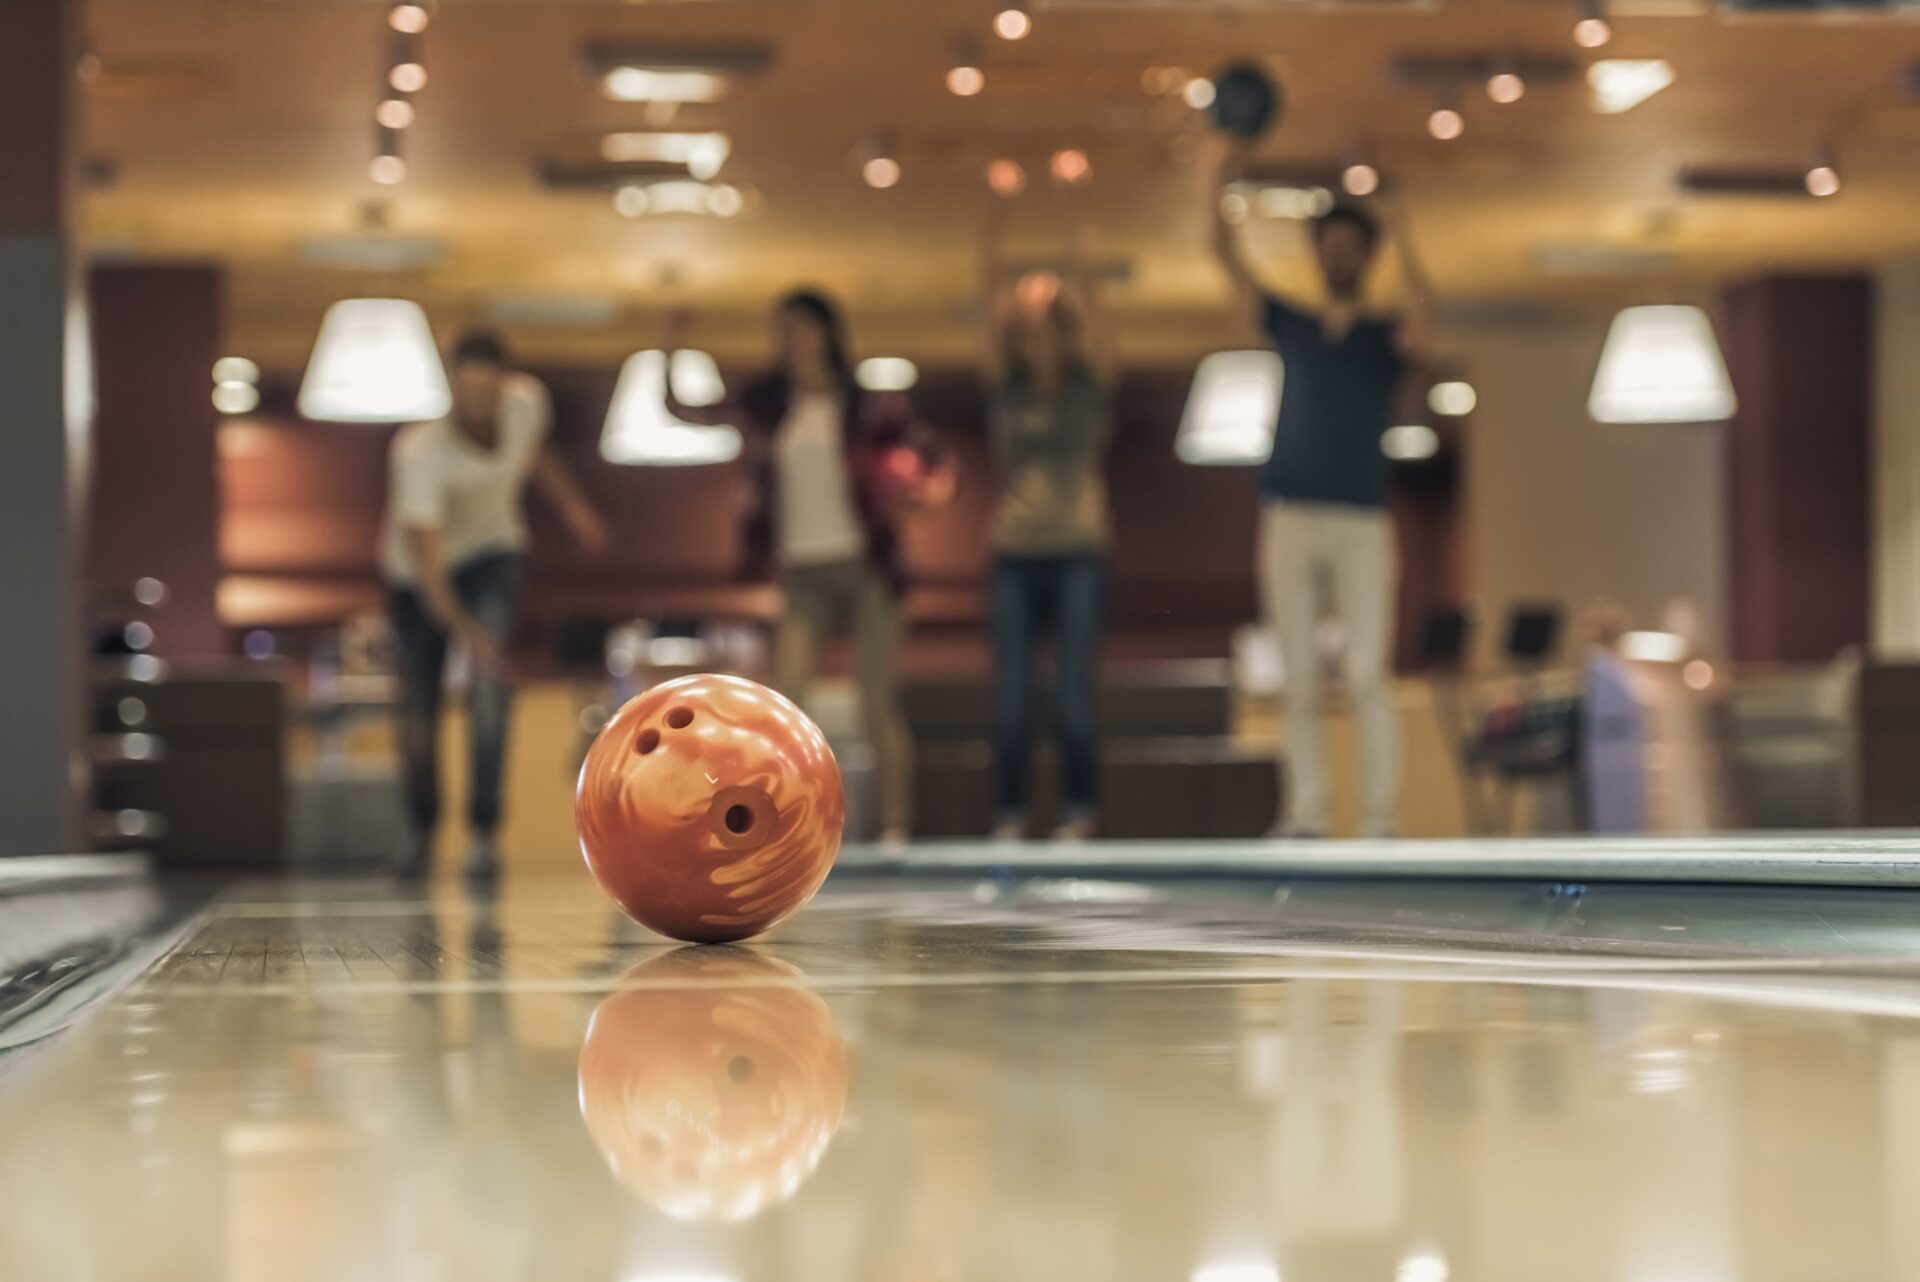 Friends playing bowling